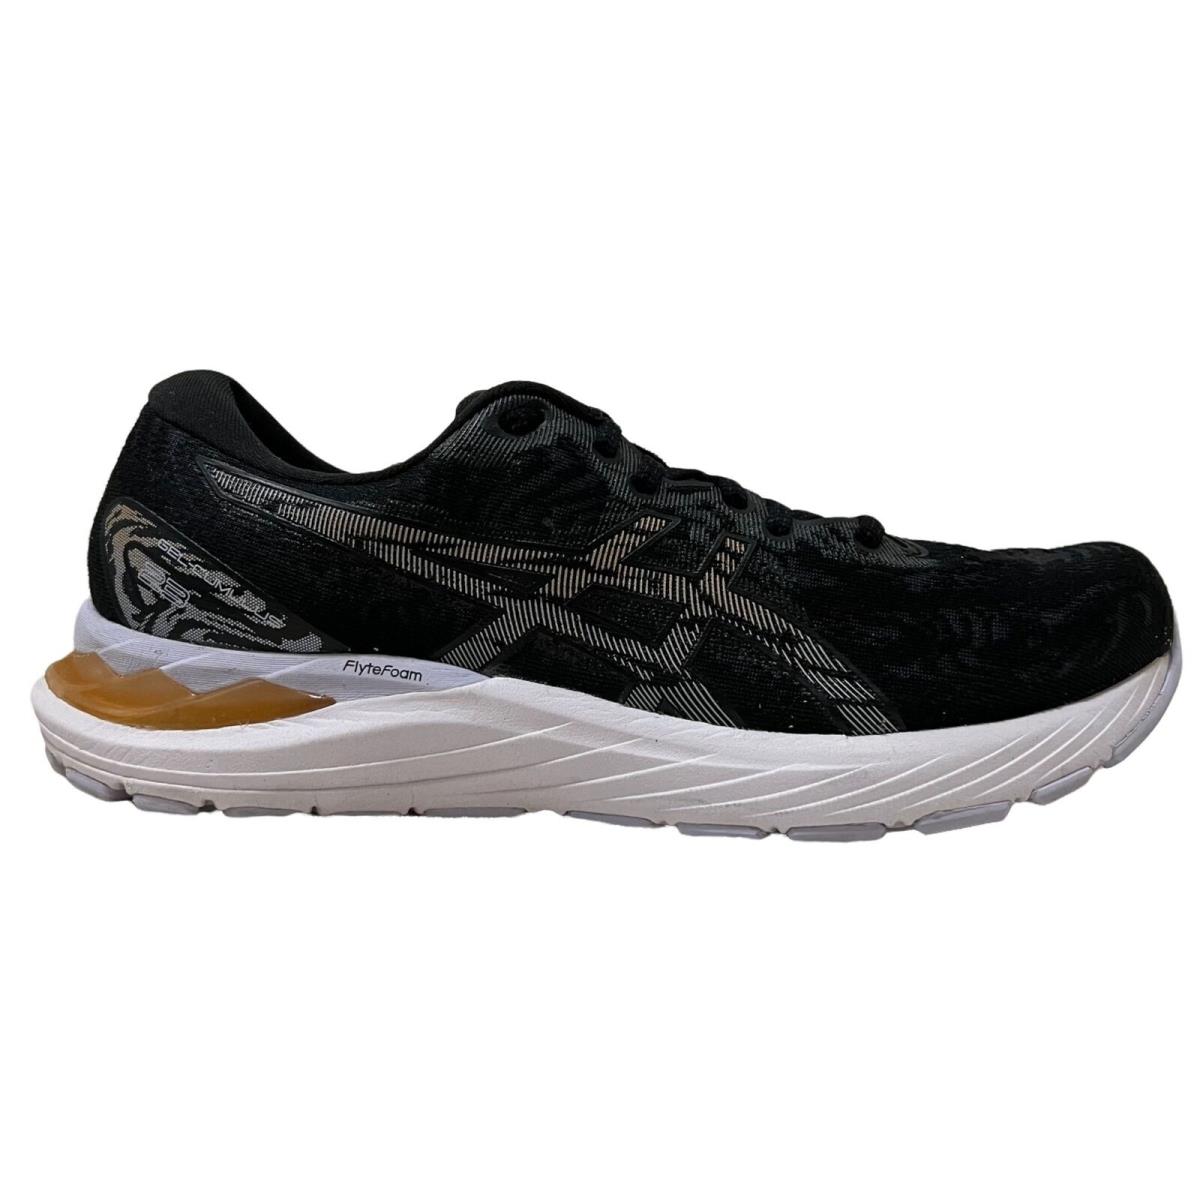 Asics Gel-cumulus 23 Womens Running Shoes 1012A888 Black / Graphite Grey Sz 8.5